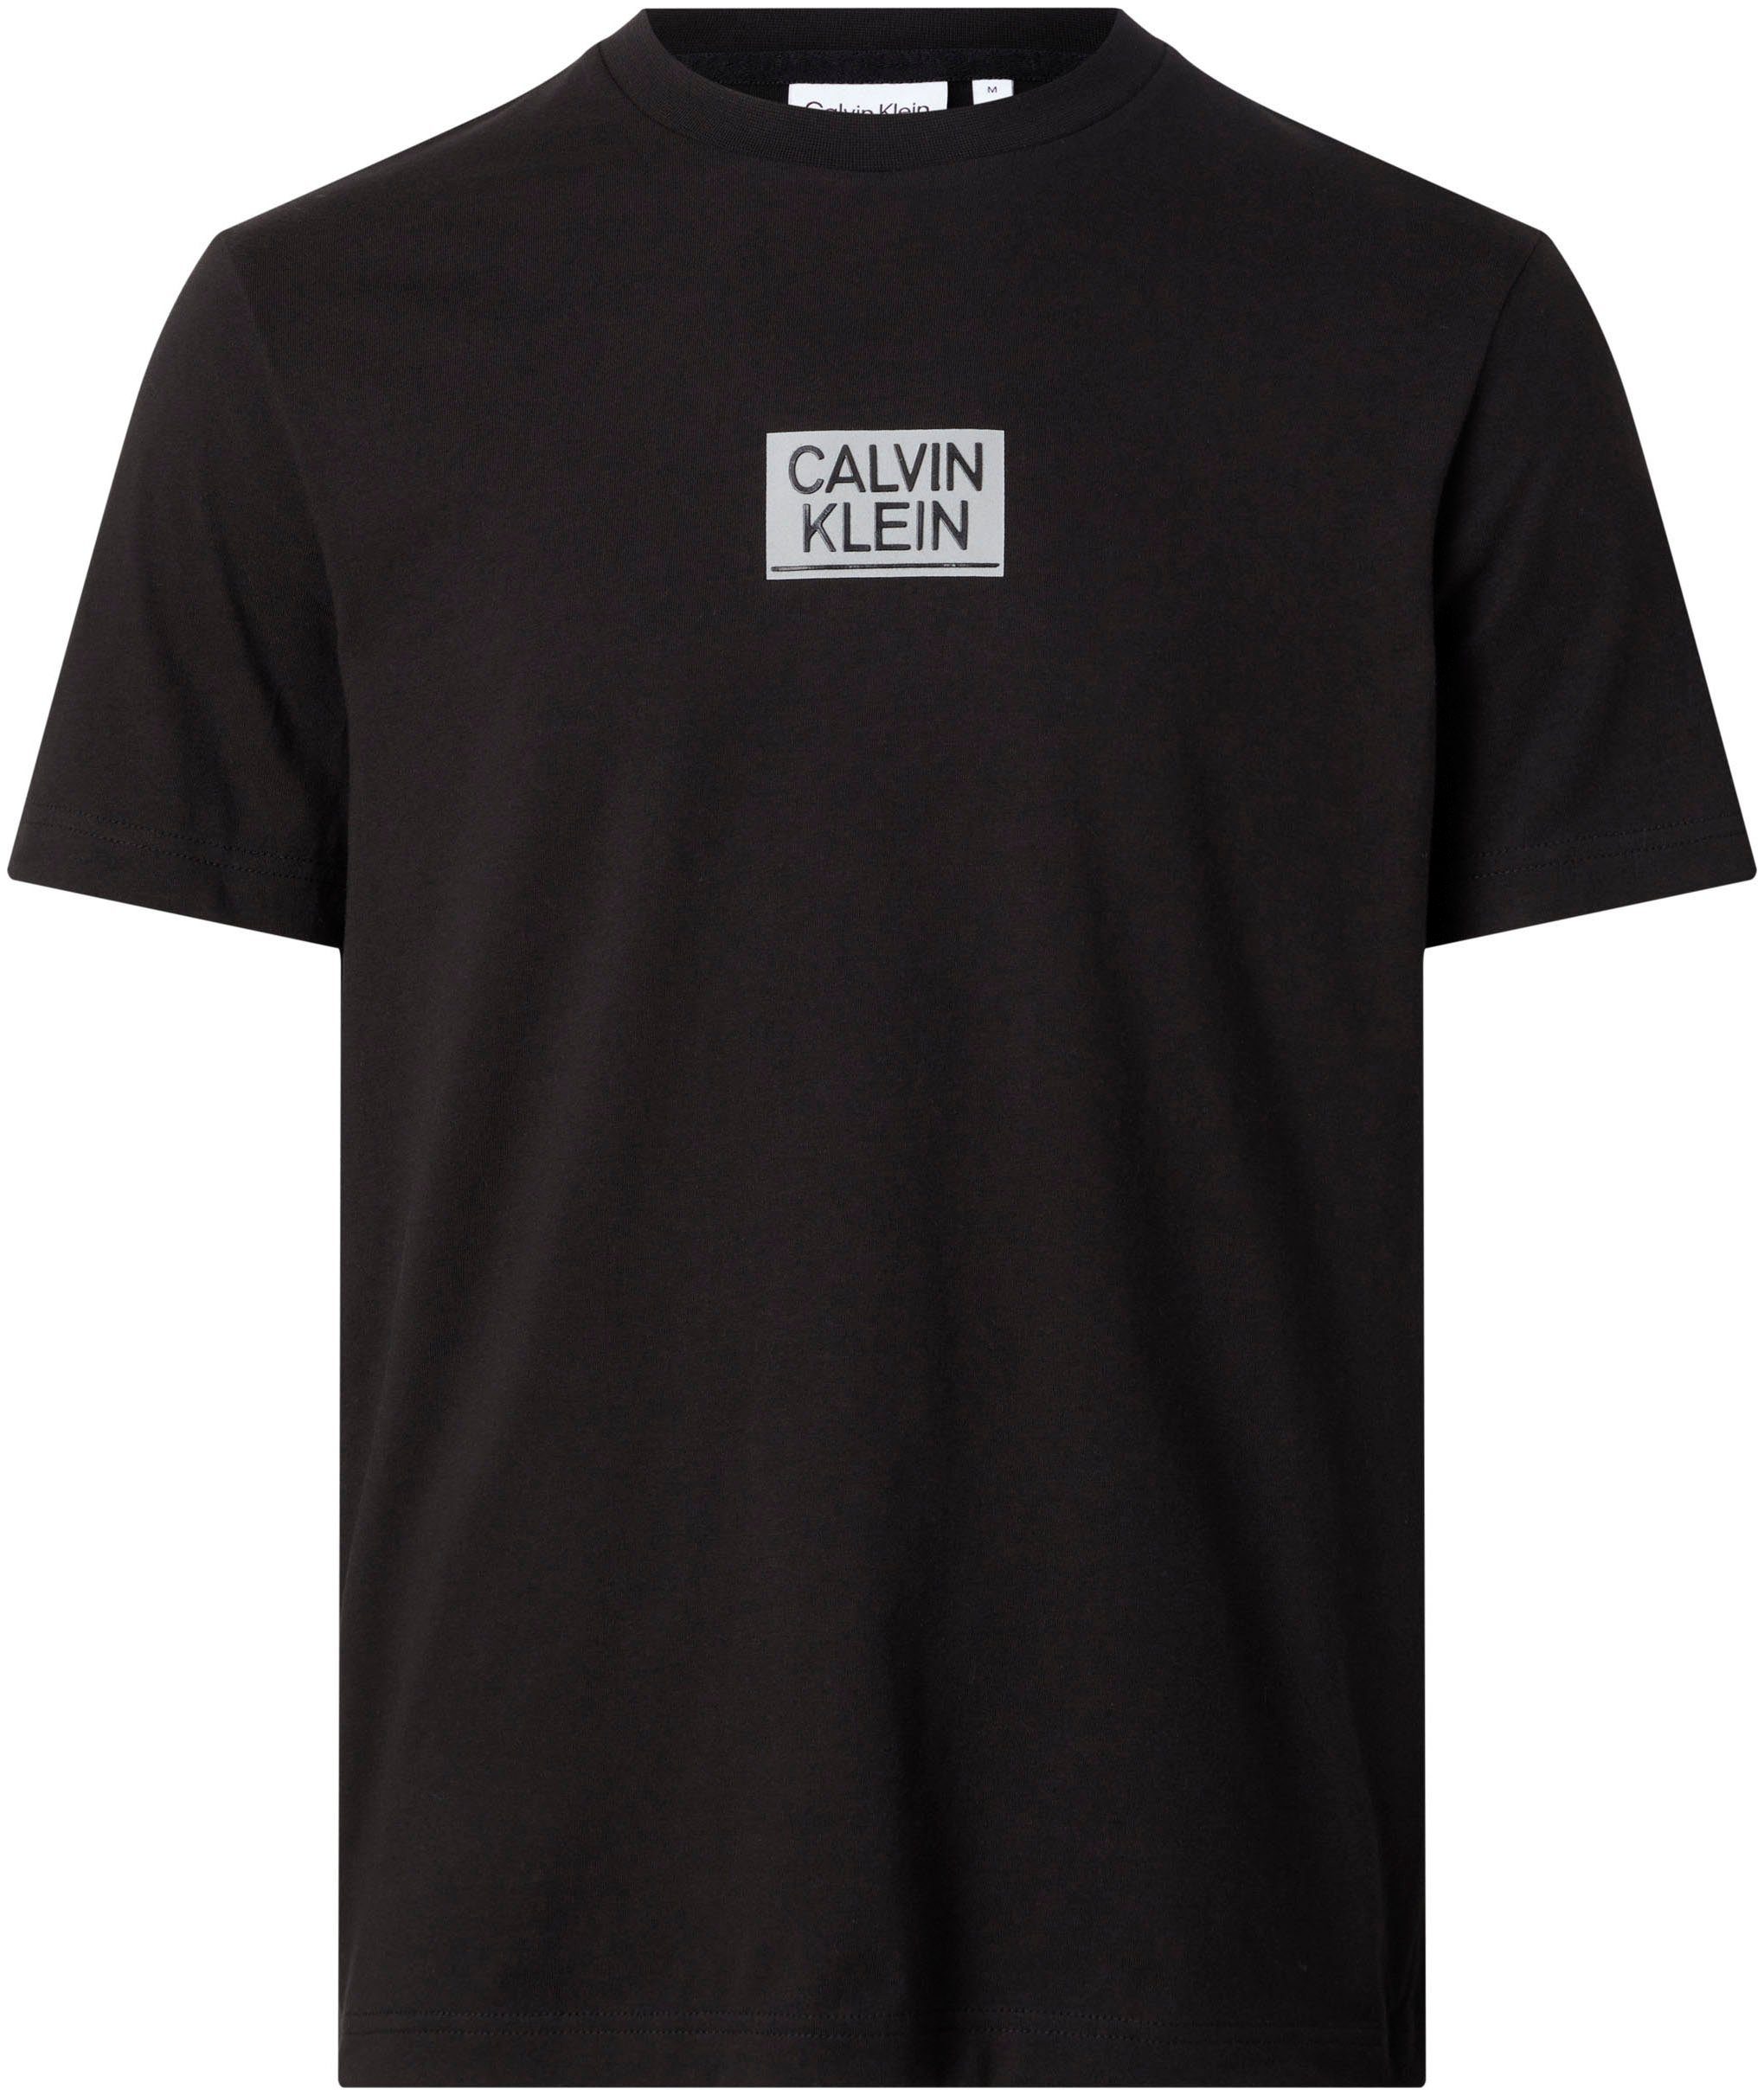 LOGO GLOSS STENCIL T-SHIRT Black Calvin T-Shirt Ck Klein